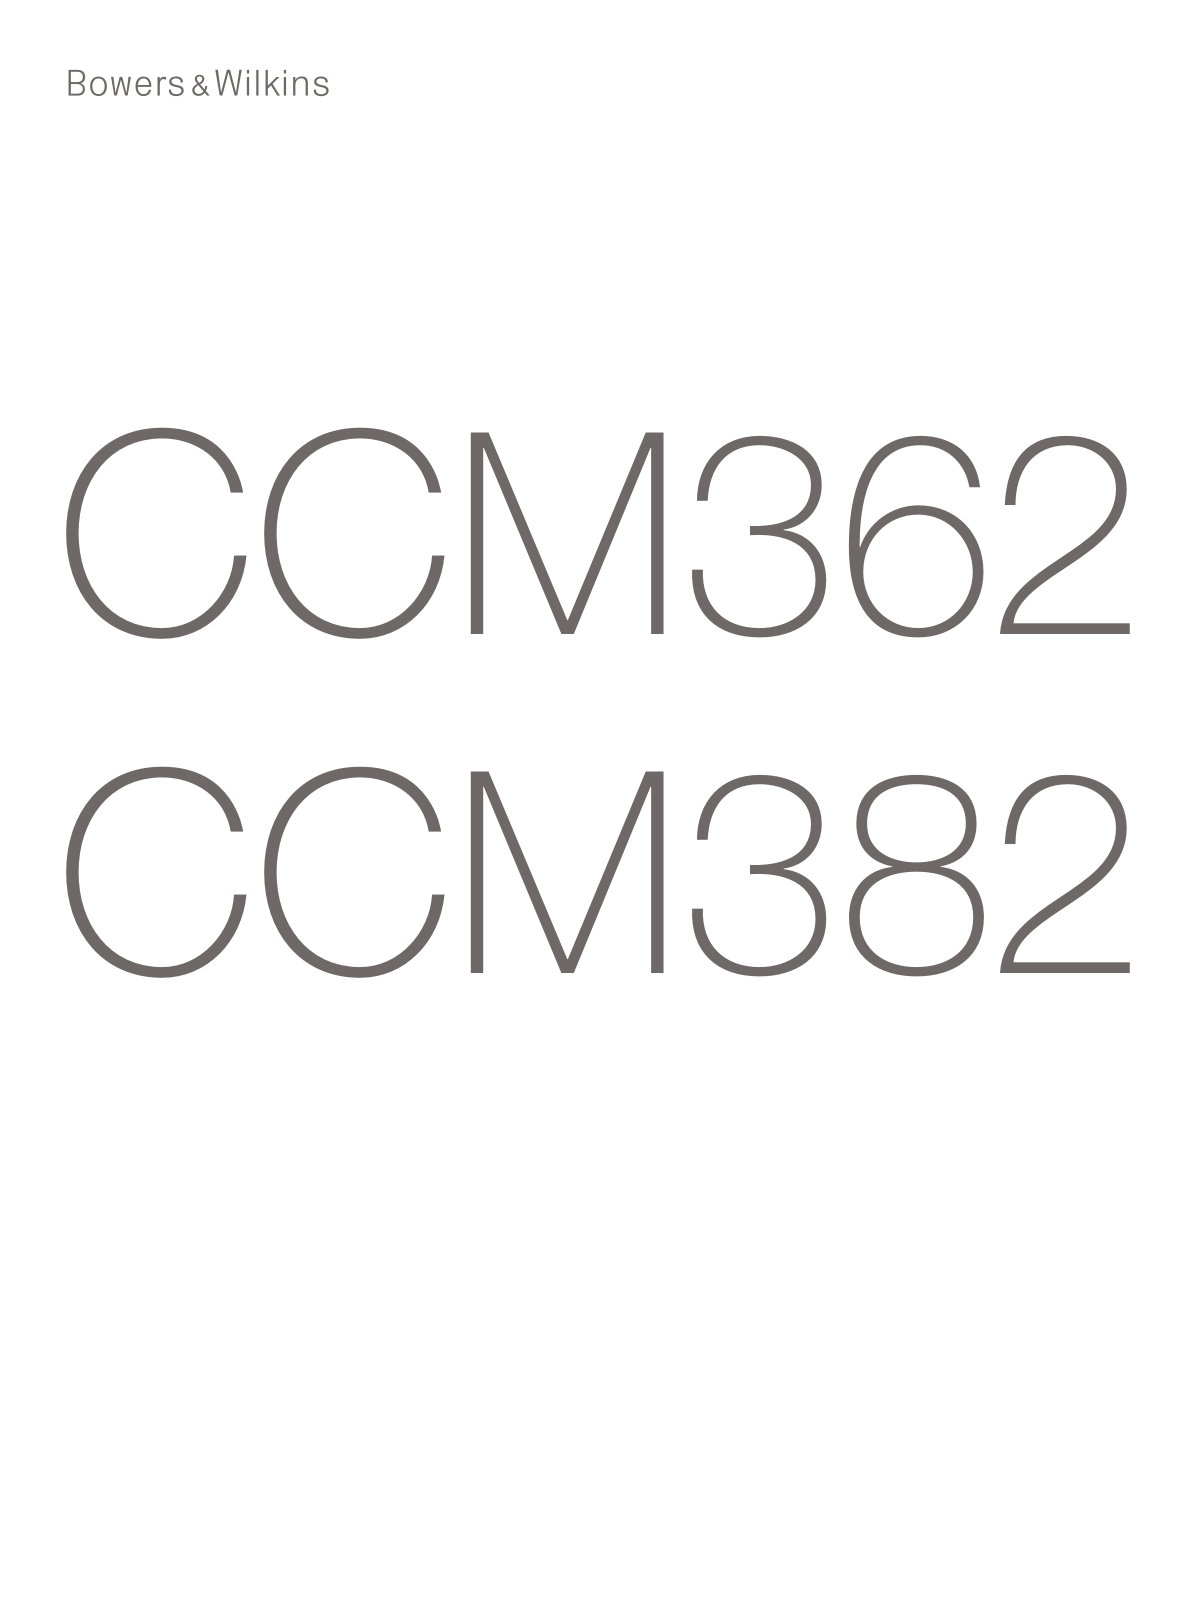 Bowers & Wilkins CCM 362 User Manual